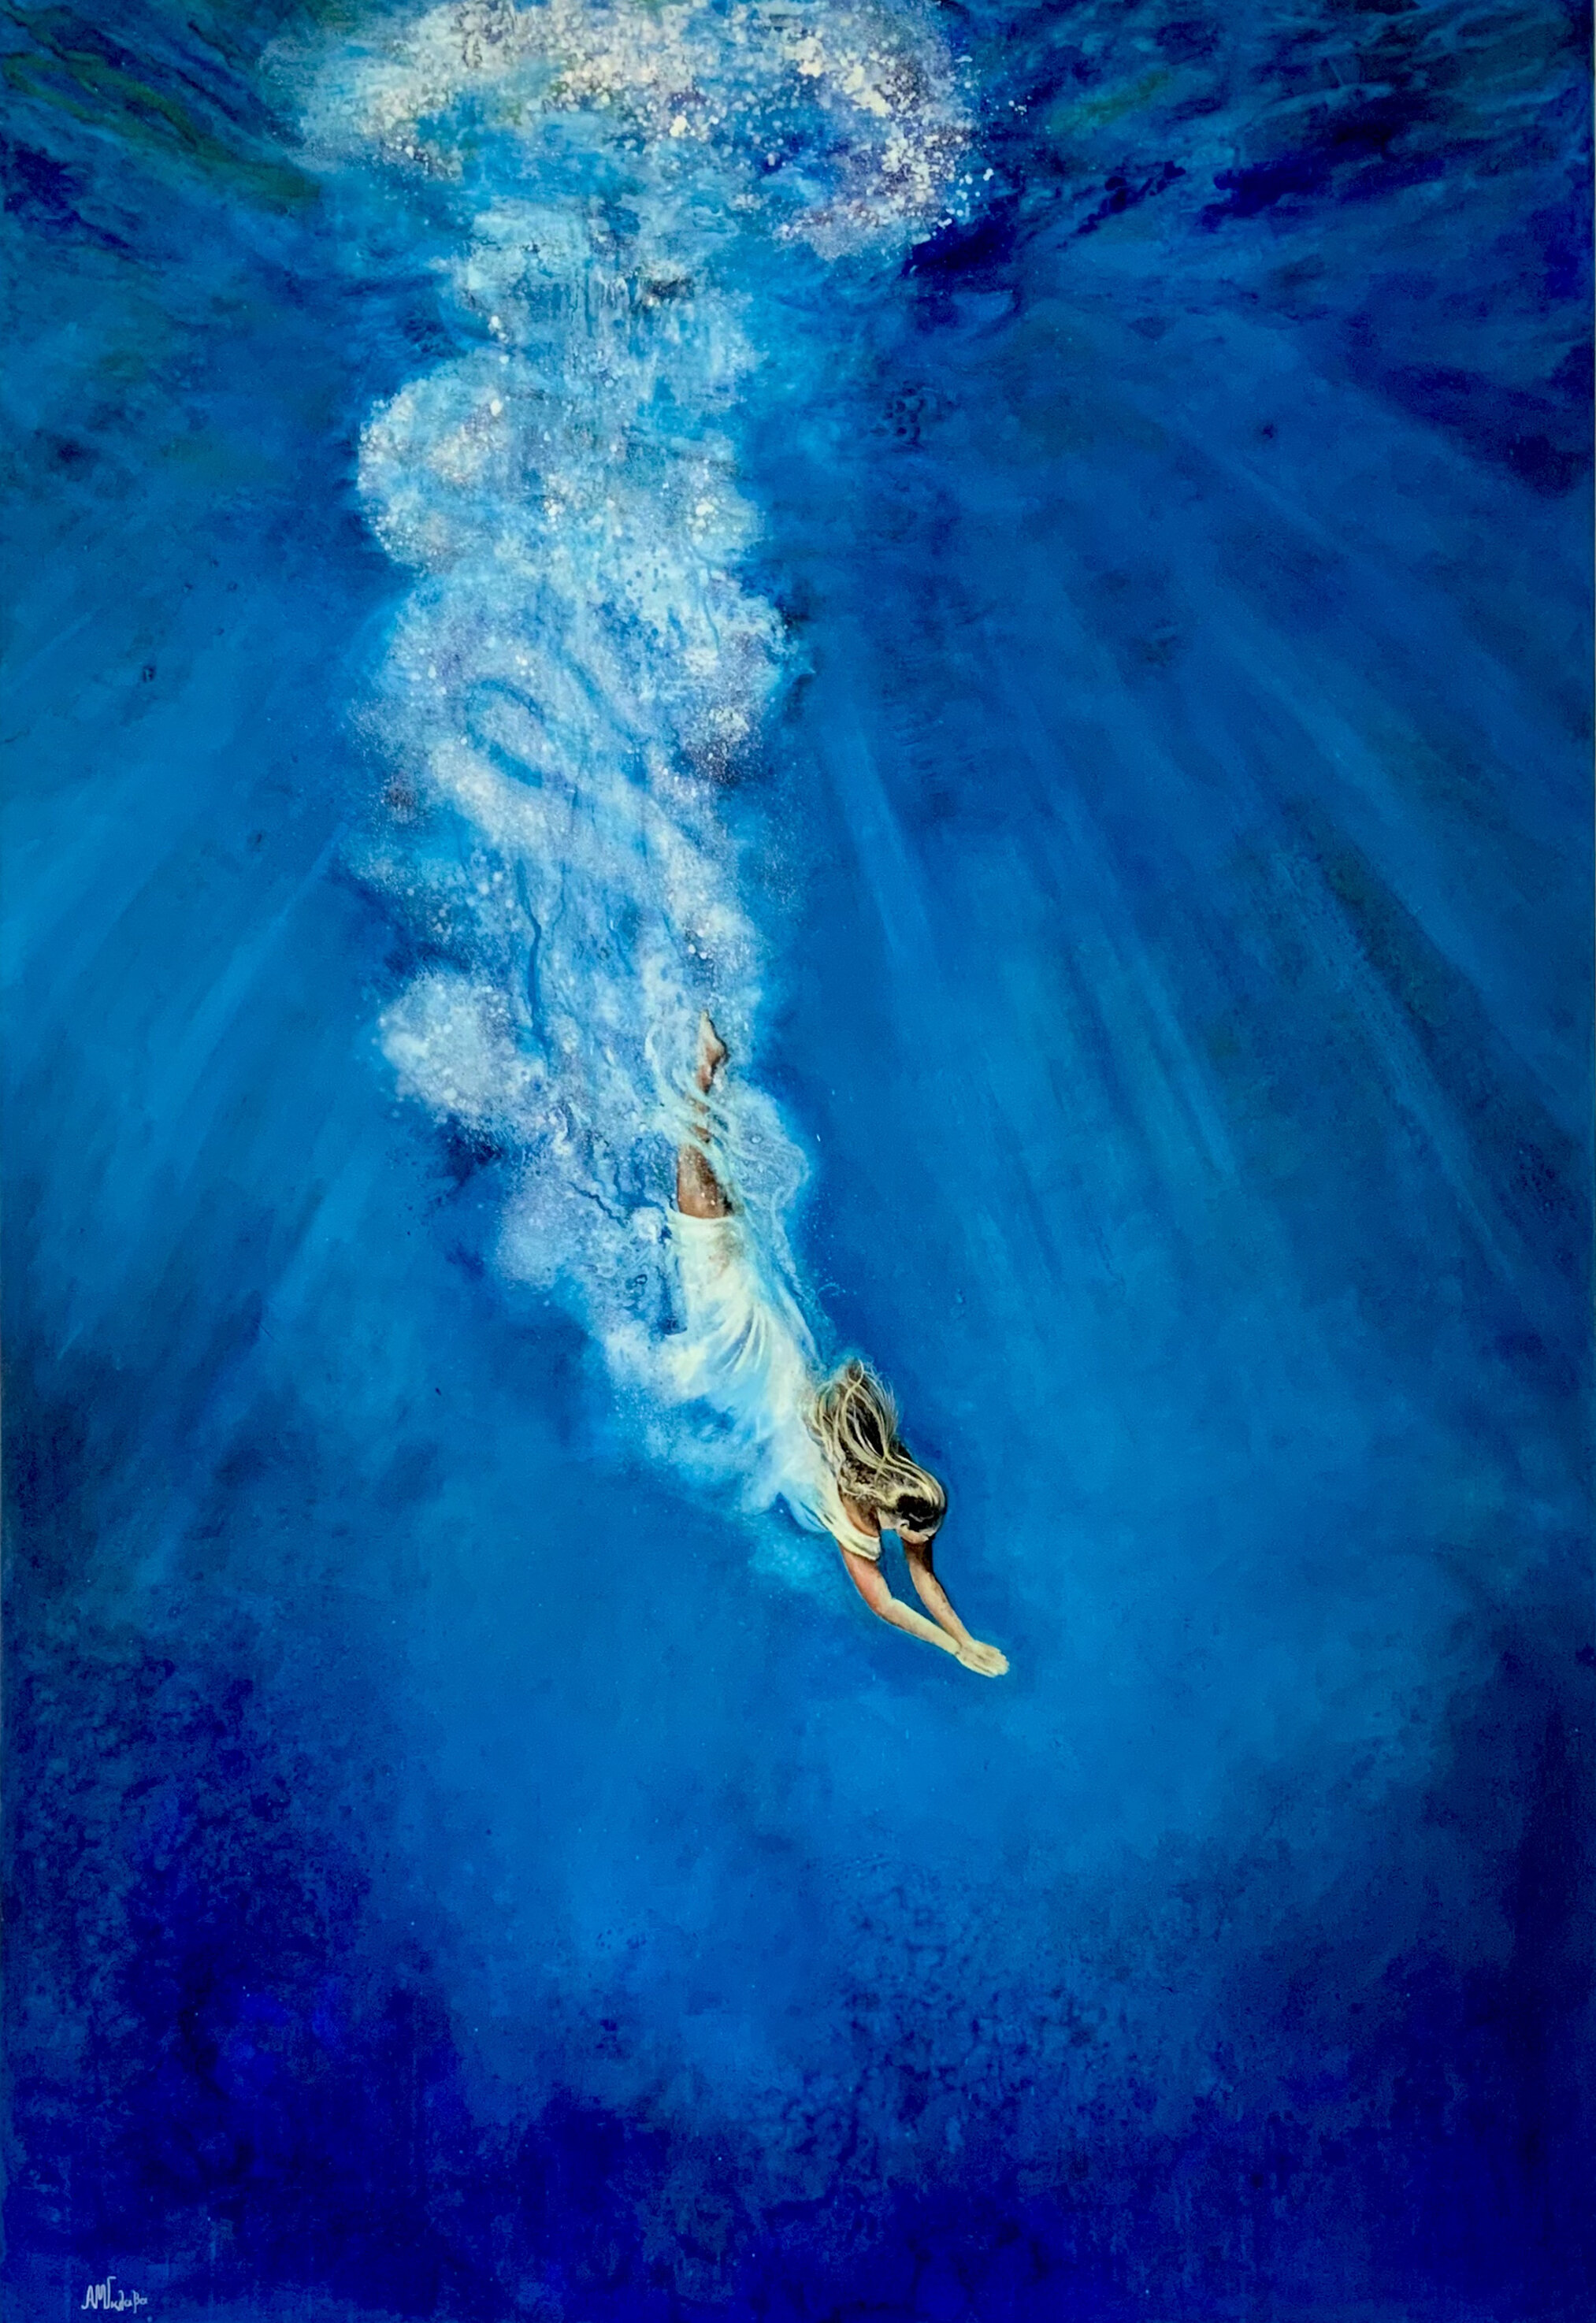  Anastasia Gklava -  Mesopelagos  - Oil on canvas - Dim: 59x39 in / 150x100 cm  